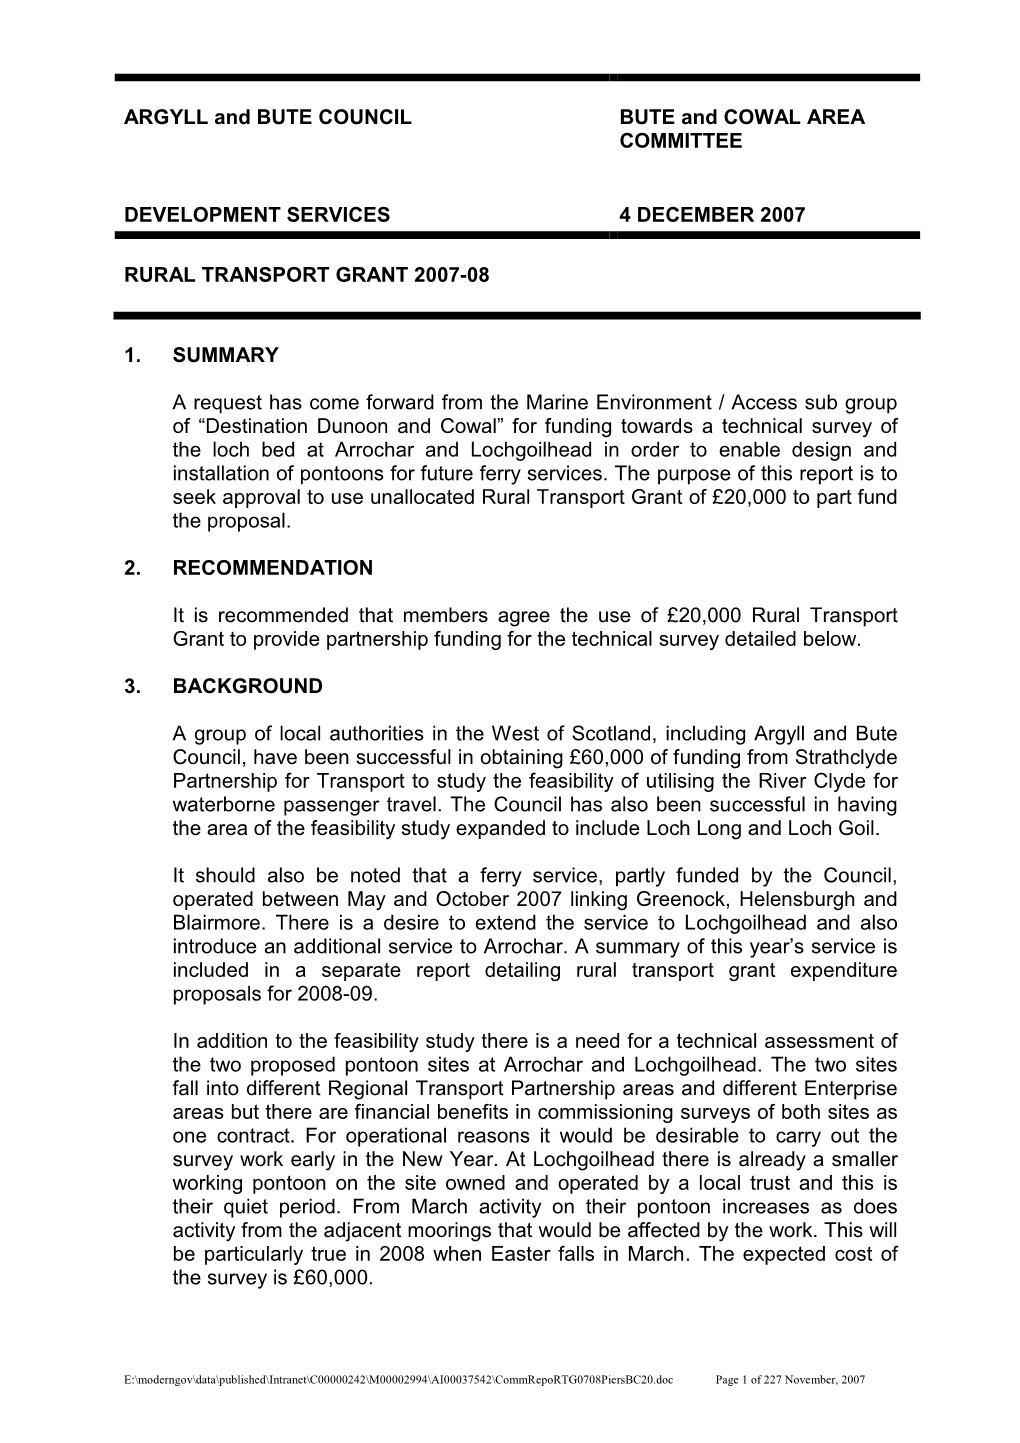 Rural Transport Grant 2007/08 PDF 72 KB